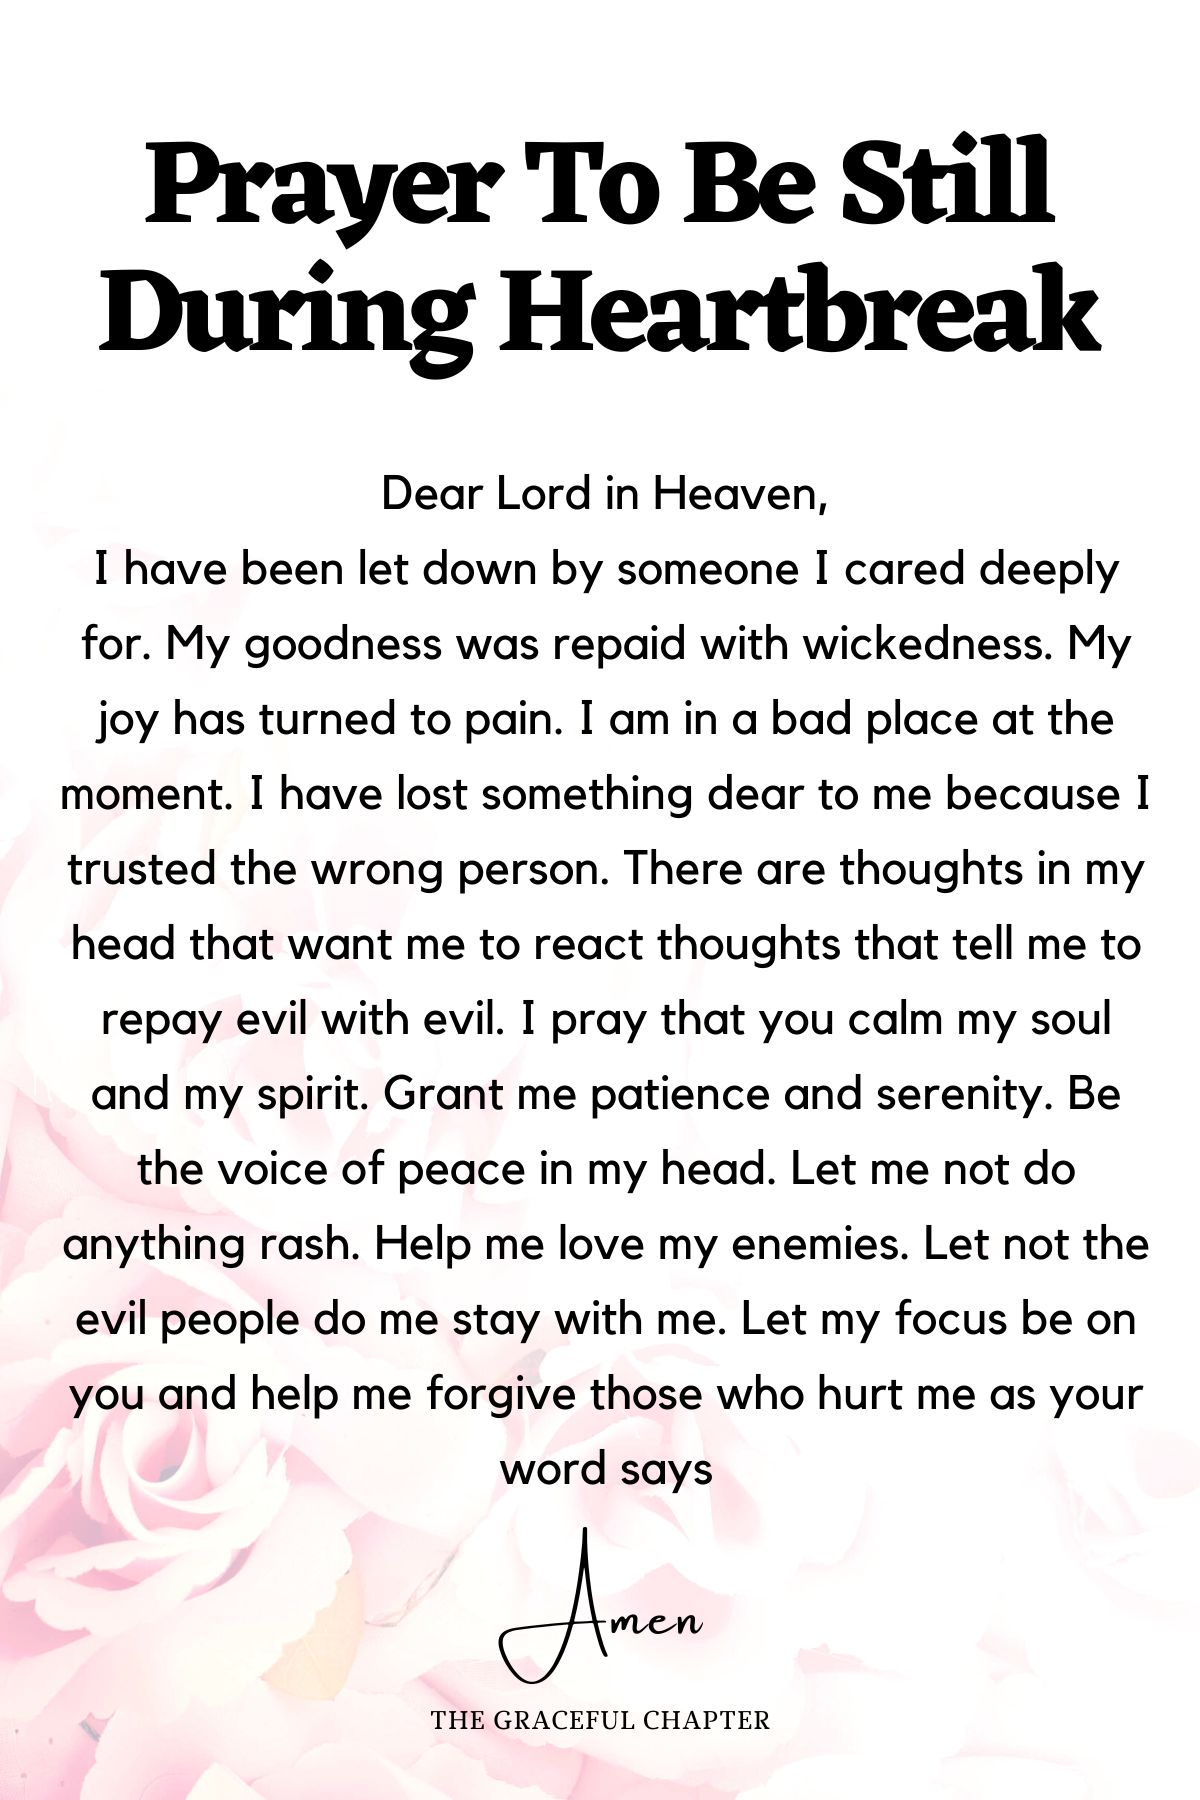 Prayer to Be still during heartbreak